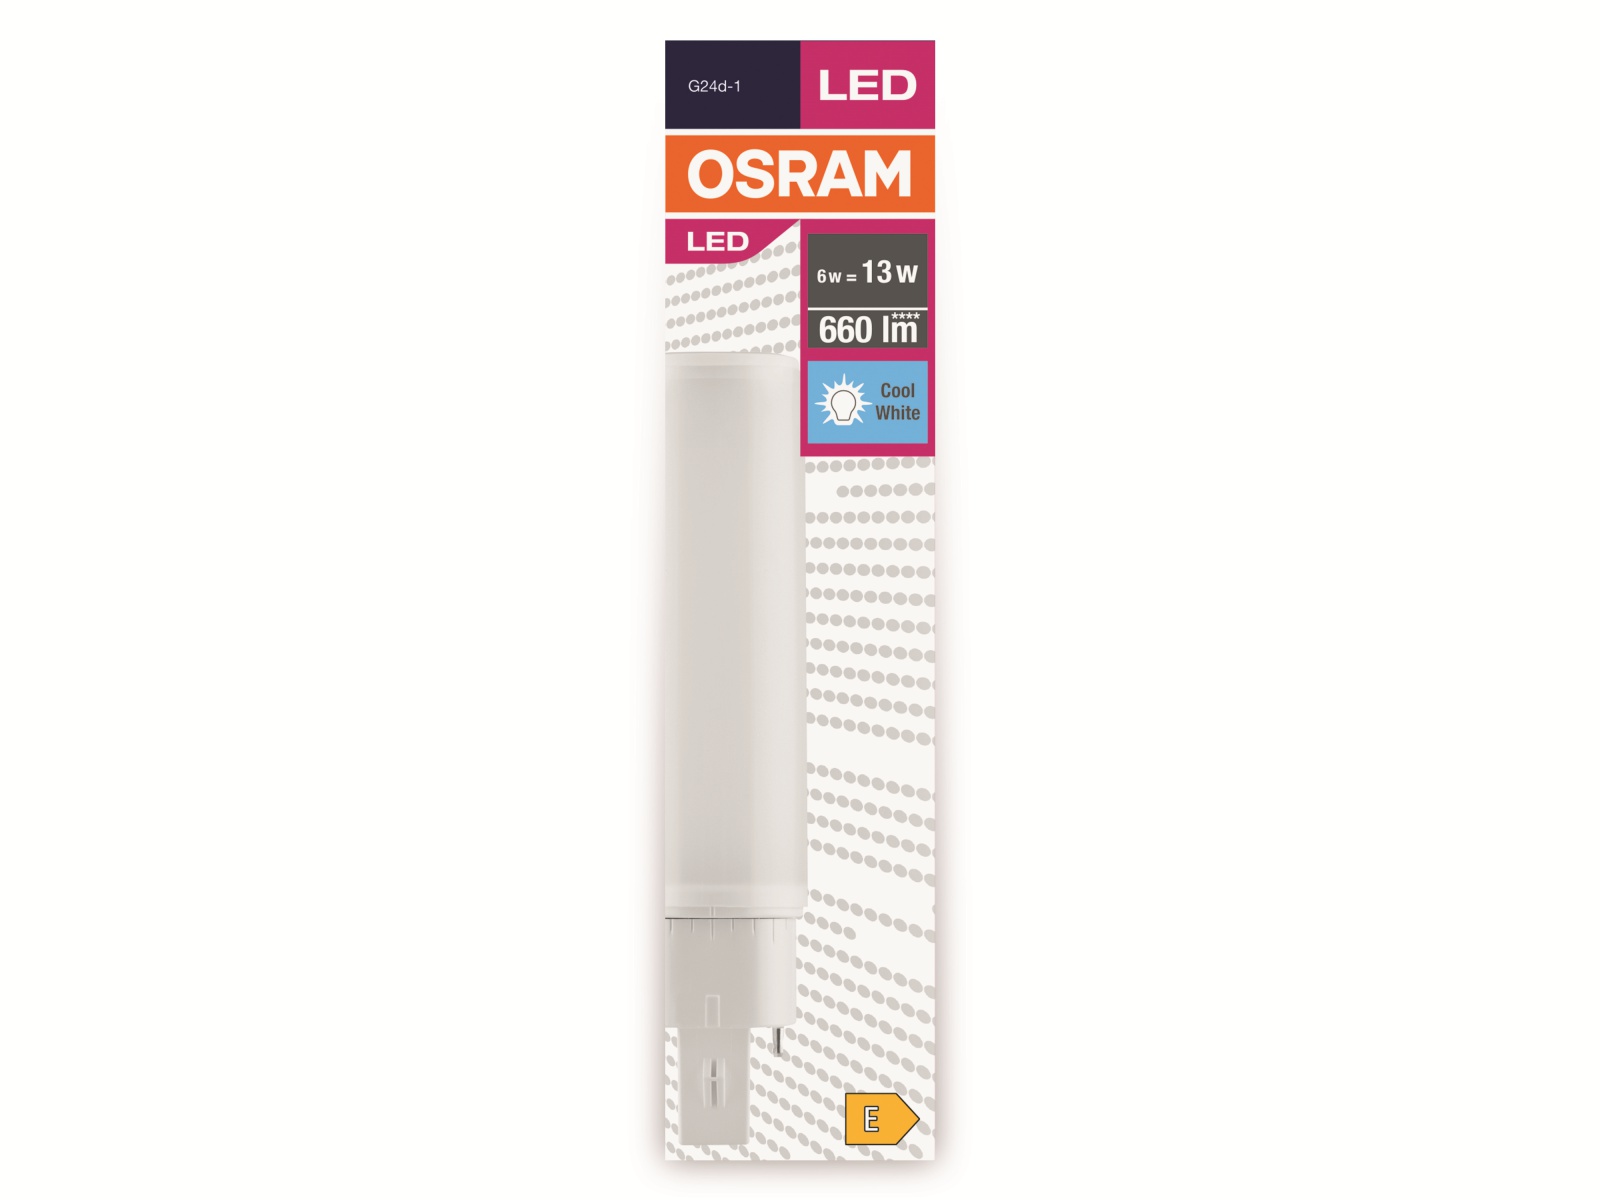 OSRAM LED-Lampe, Dulux D13, G24d-1, EEK: E, 6W, 660lm, 4000K